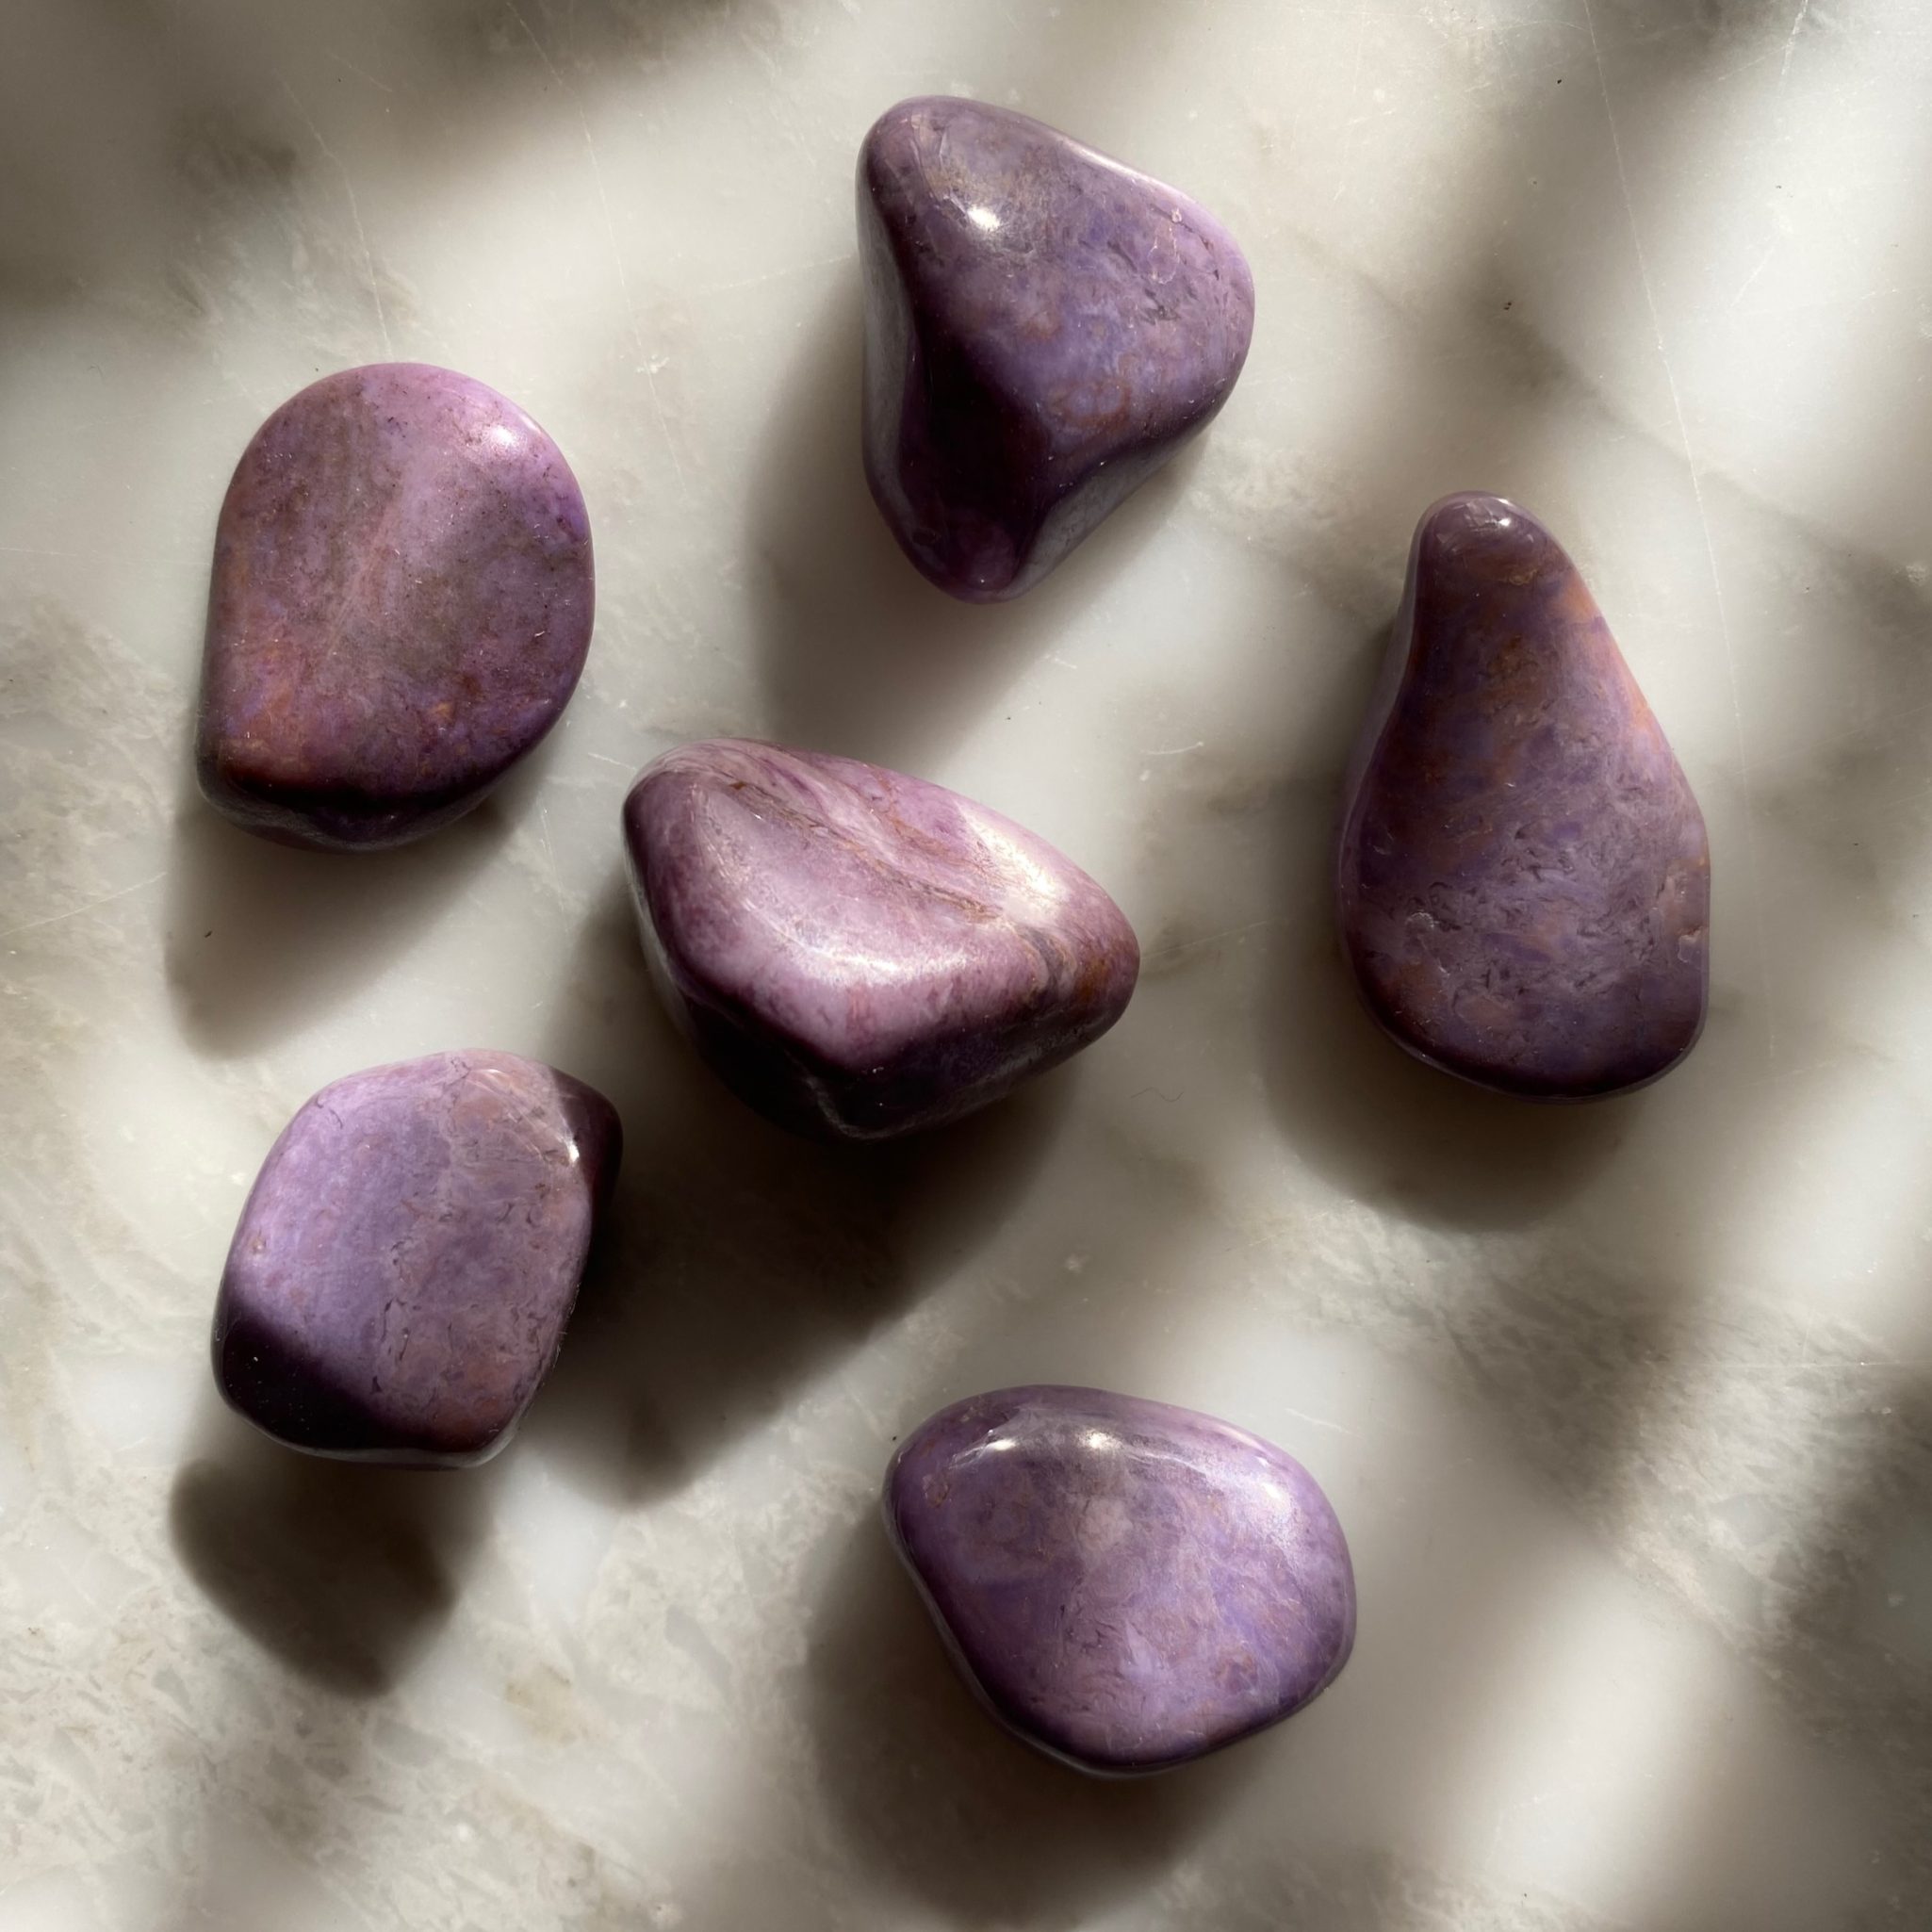 Purple jade tumbled pocket stone - jade mauve roulé pierre de poche